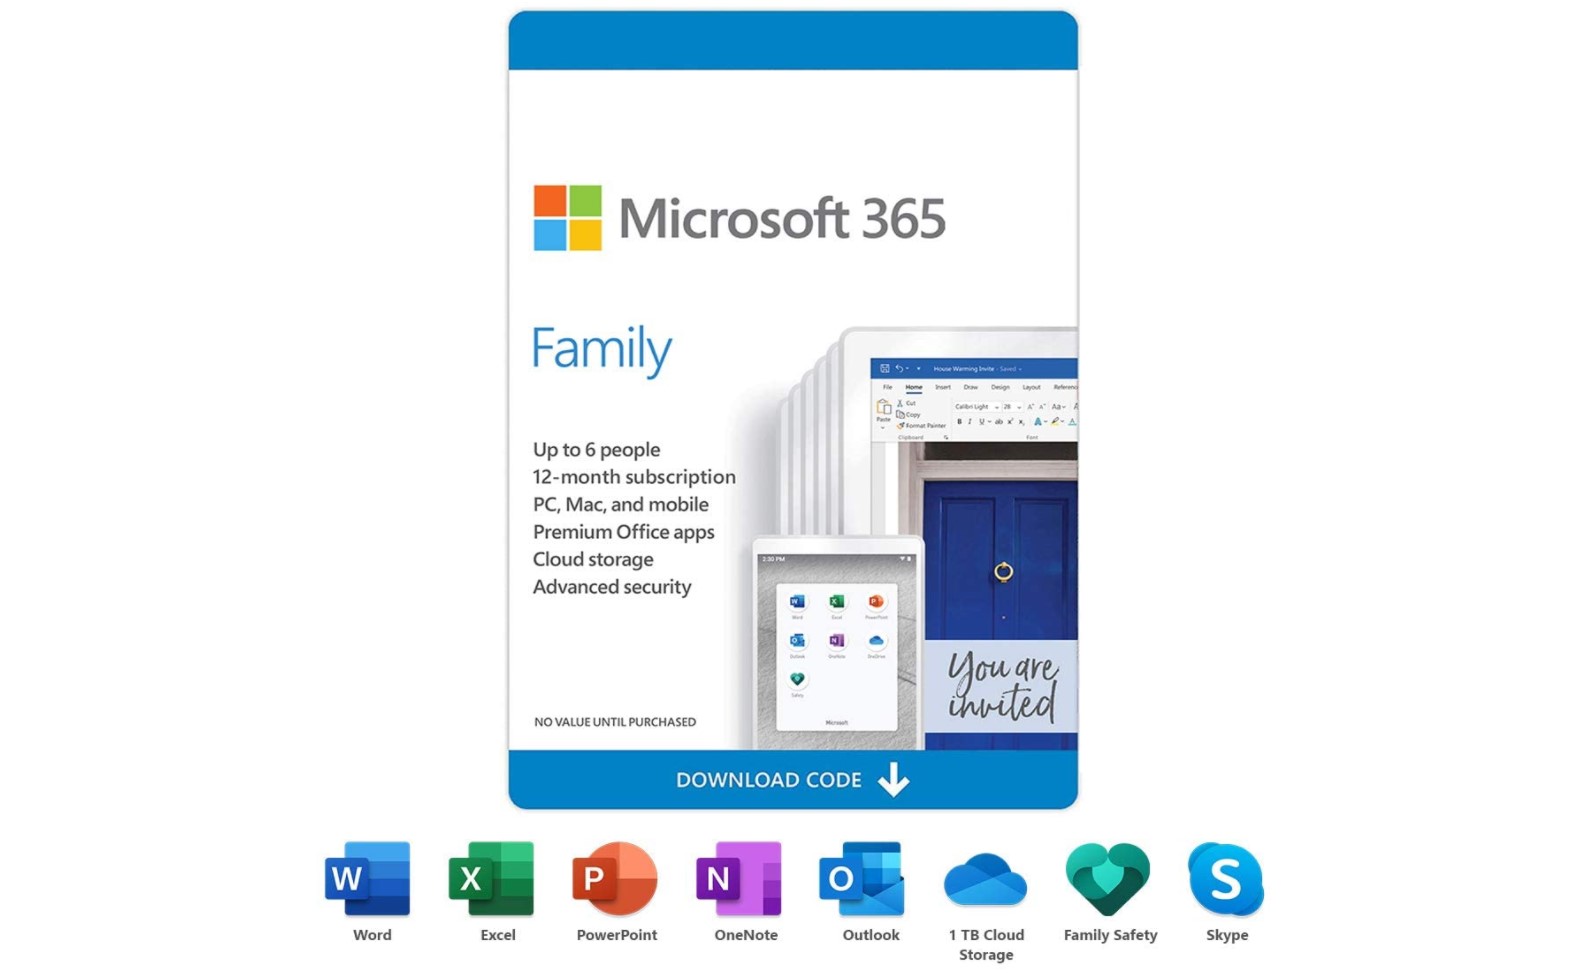 microsoft office 365 family